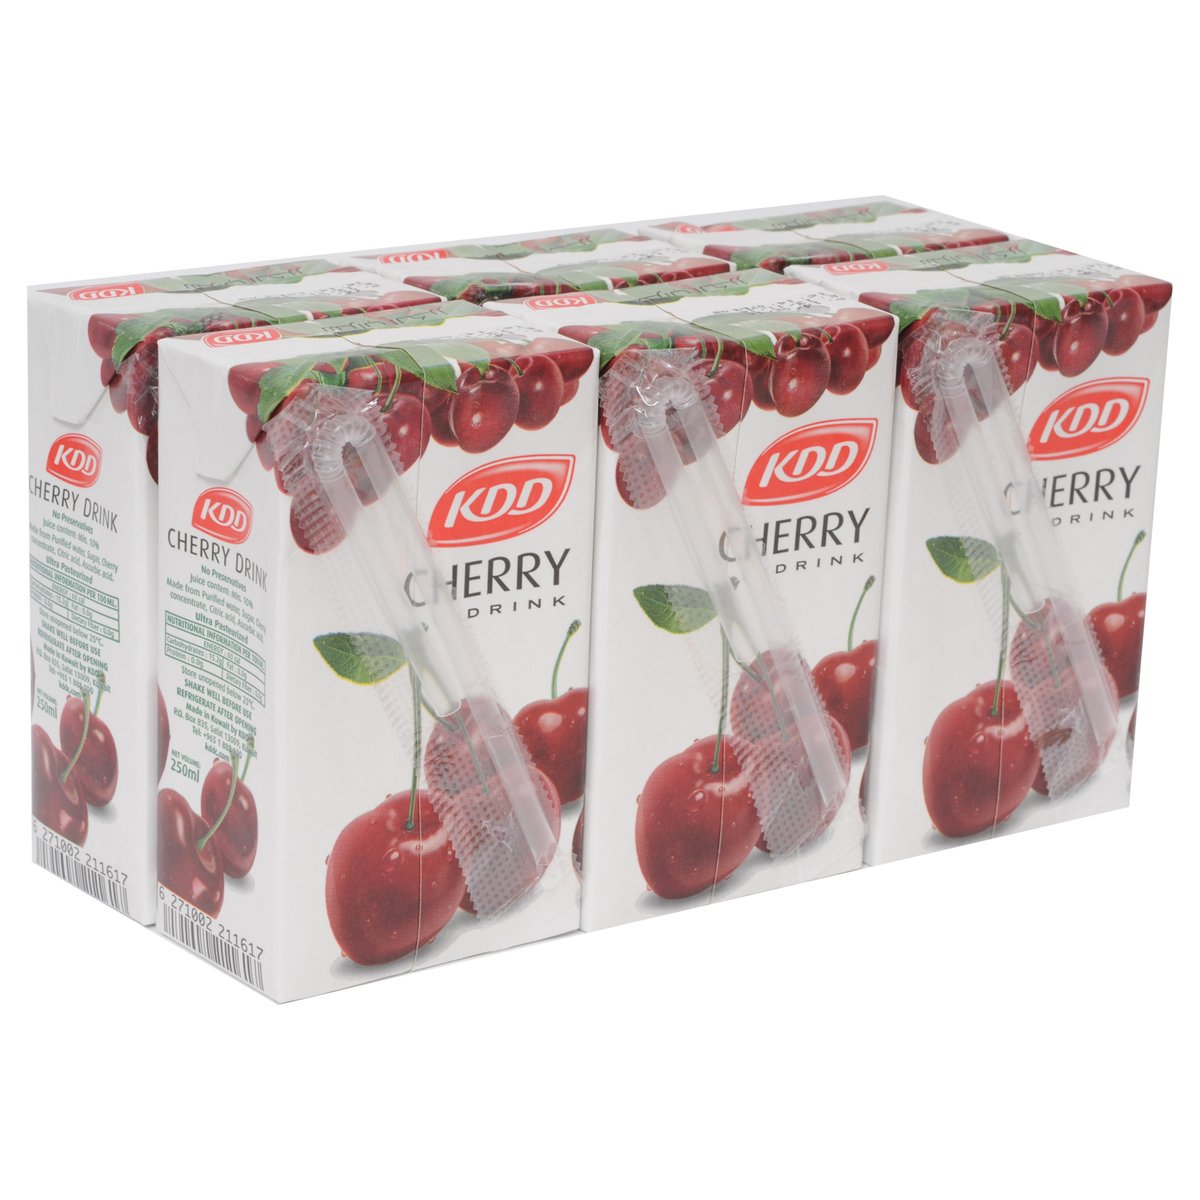 KDD Cherry Drink 250ml x 6 Pieces